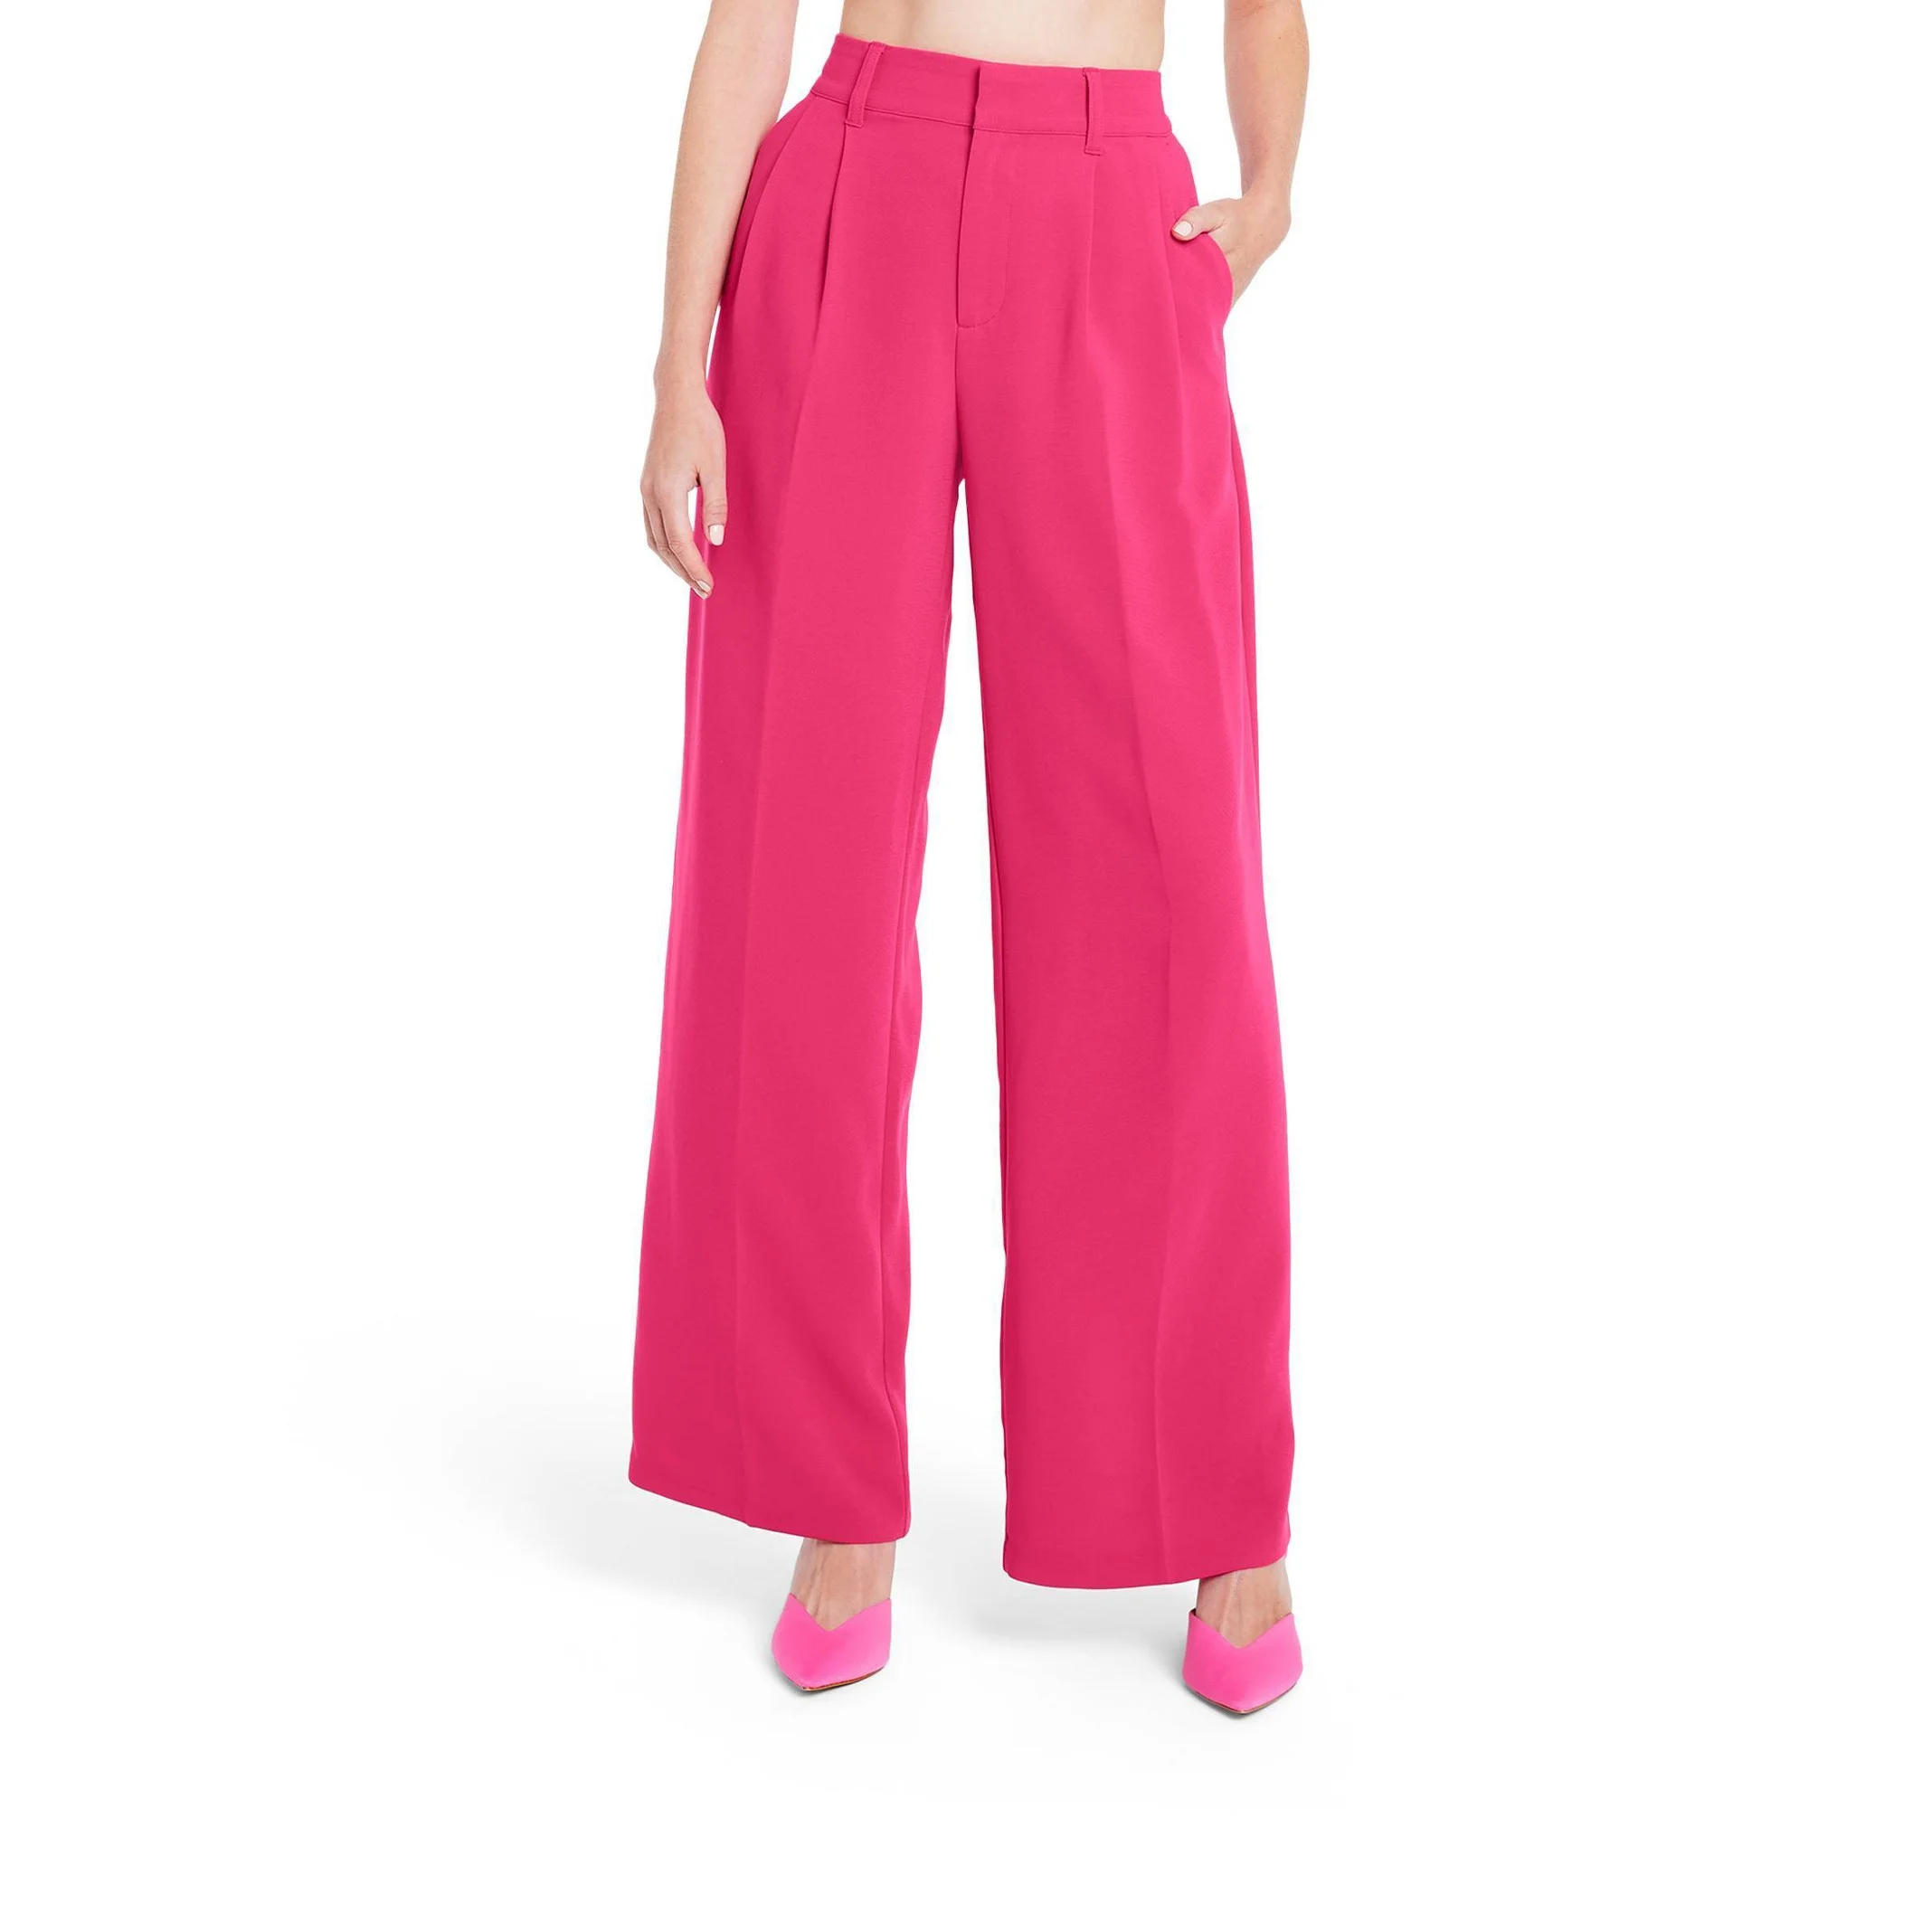 Hot Pink Pants : Target